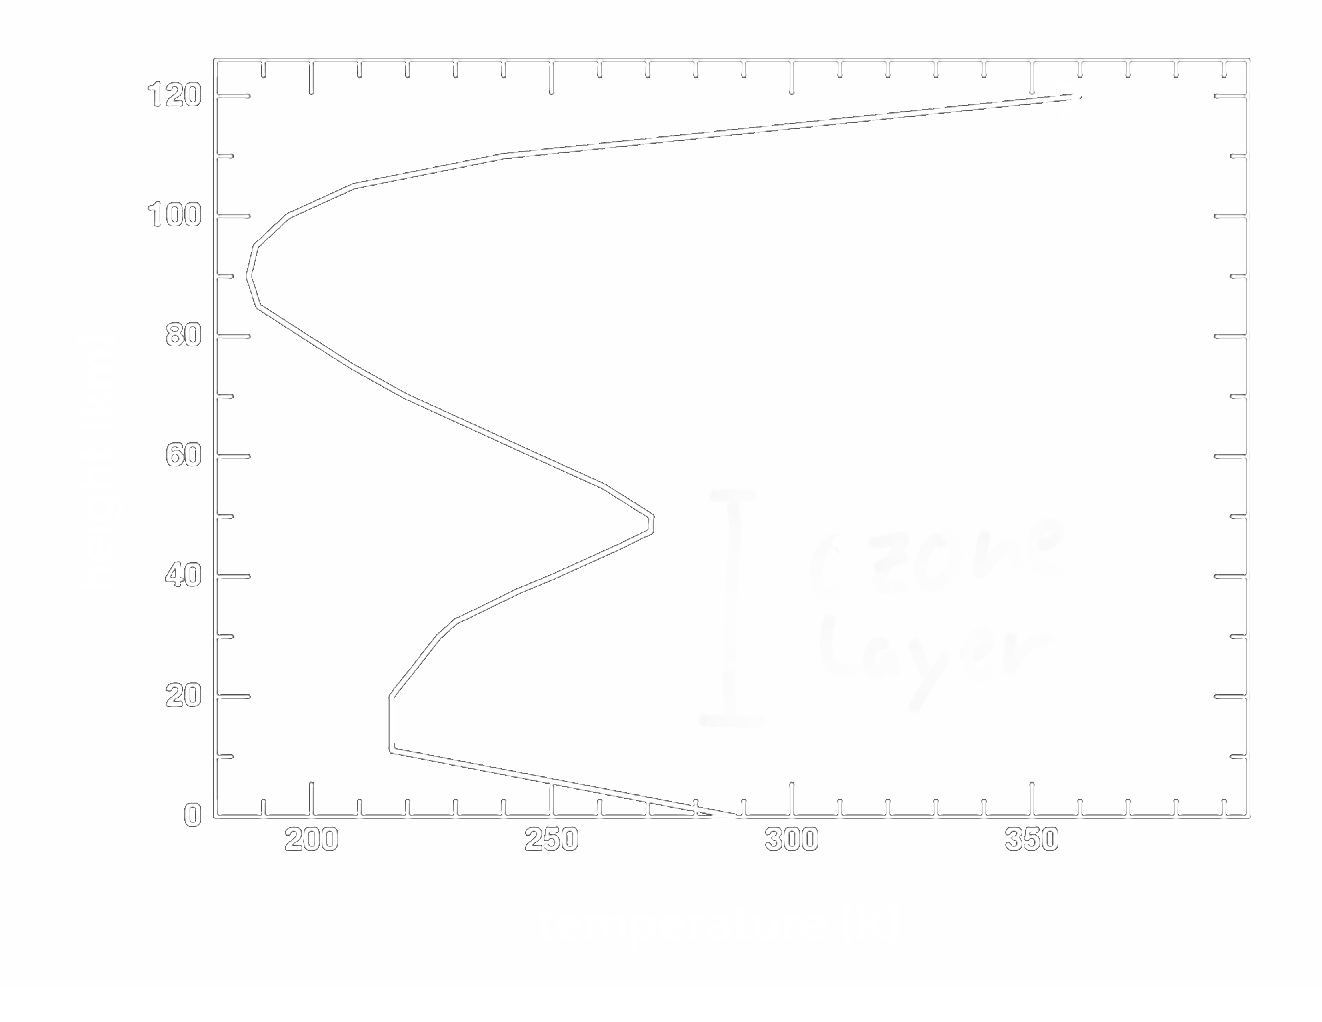 temperature profile of the atmosphere